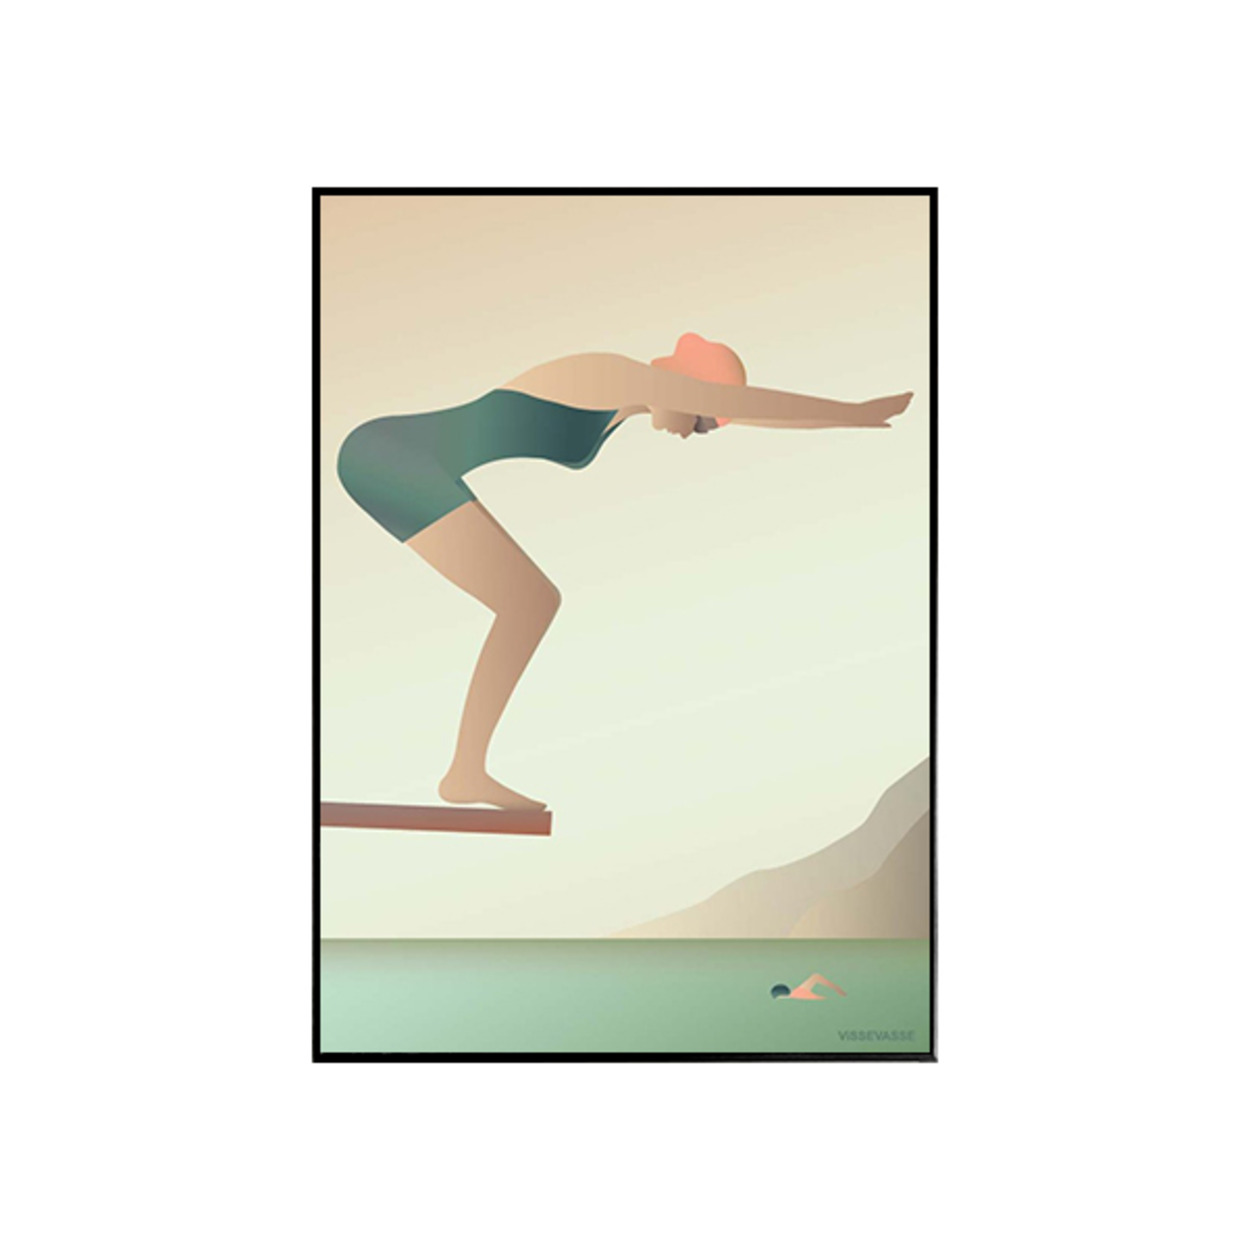 Vissevasse -  스위밍 (Swimming - poster) 30*40